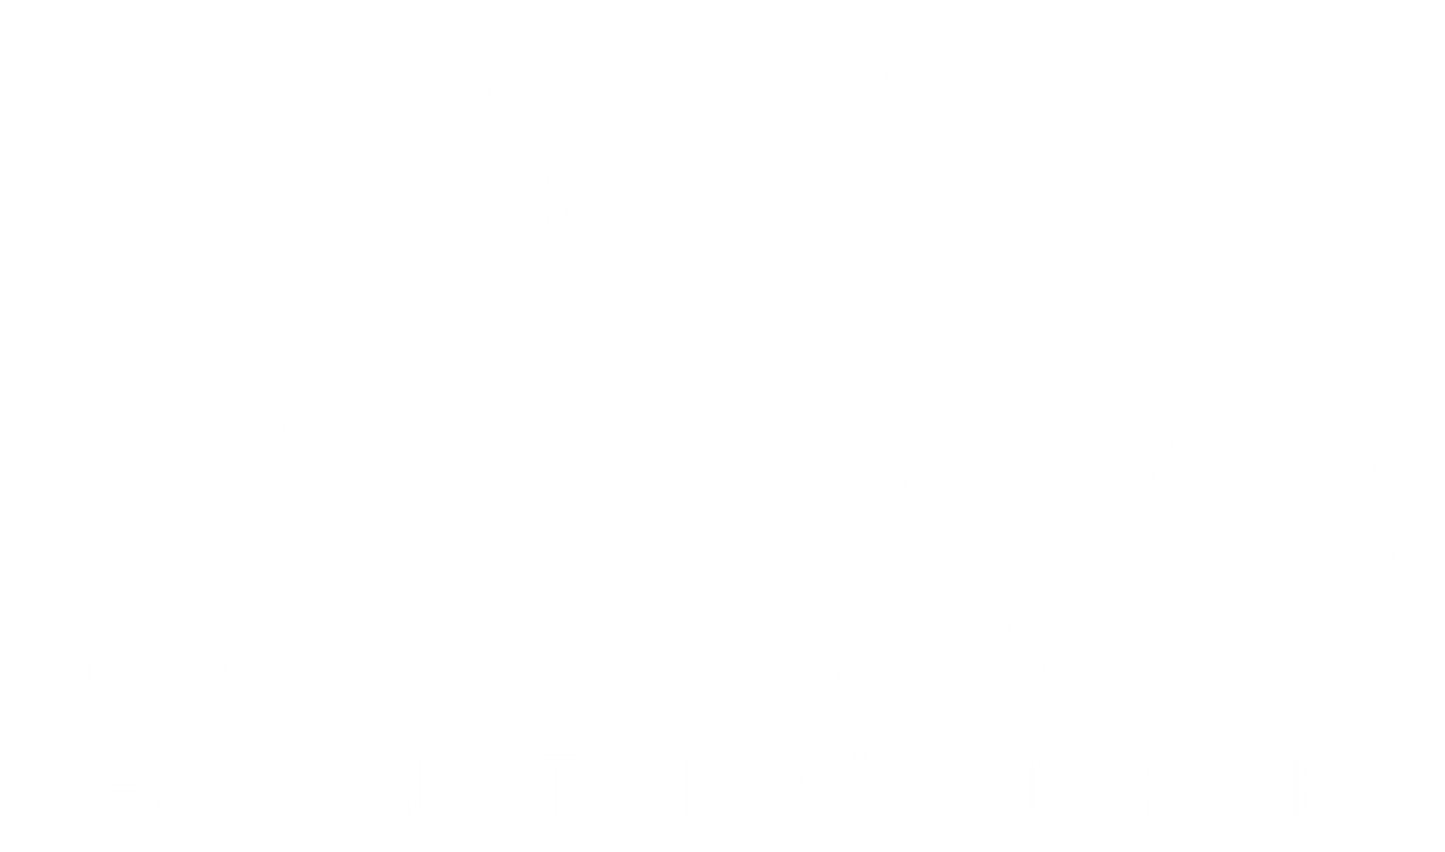 Tsao Baltimore